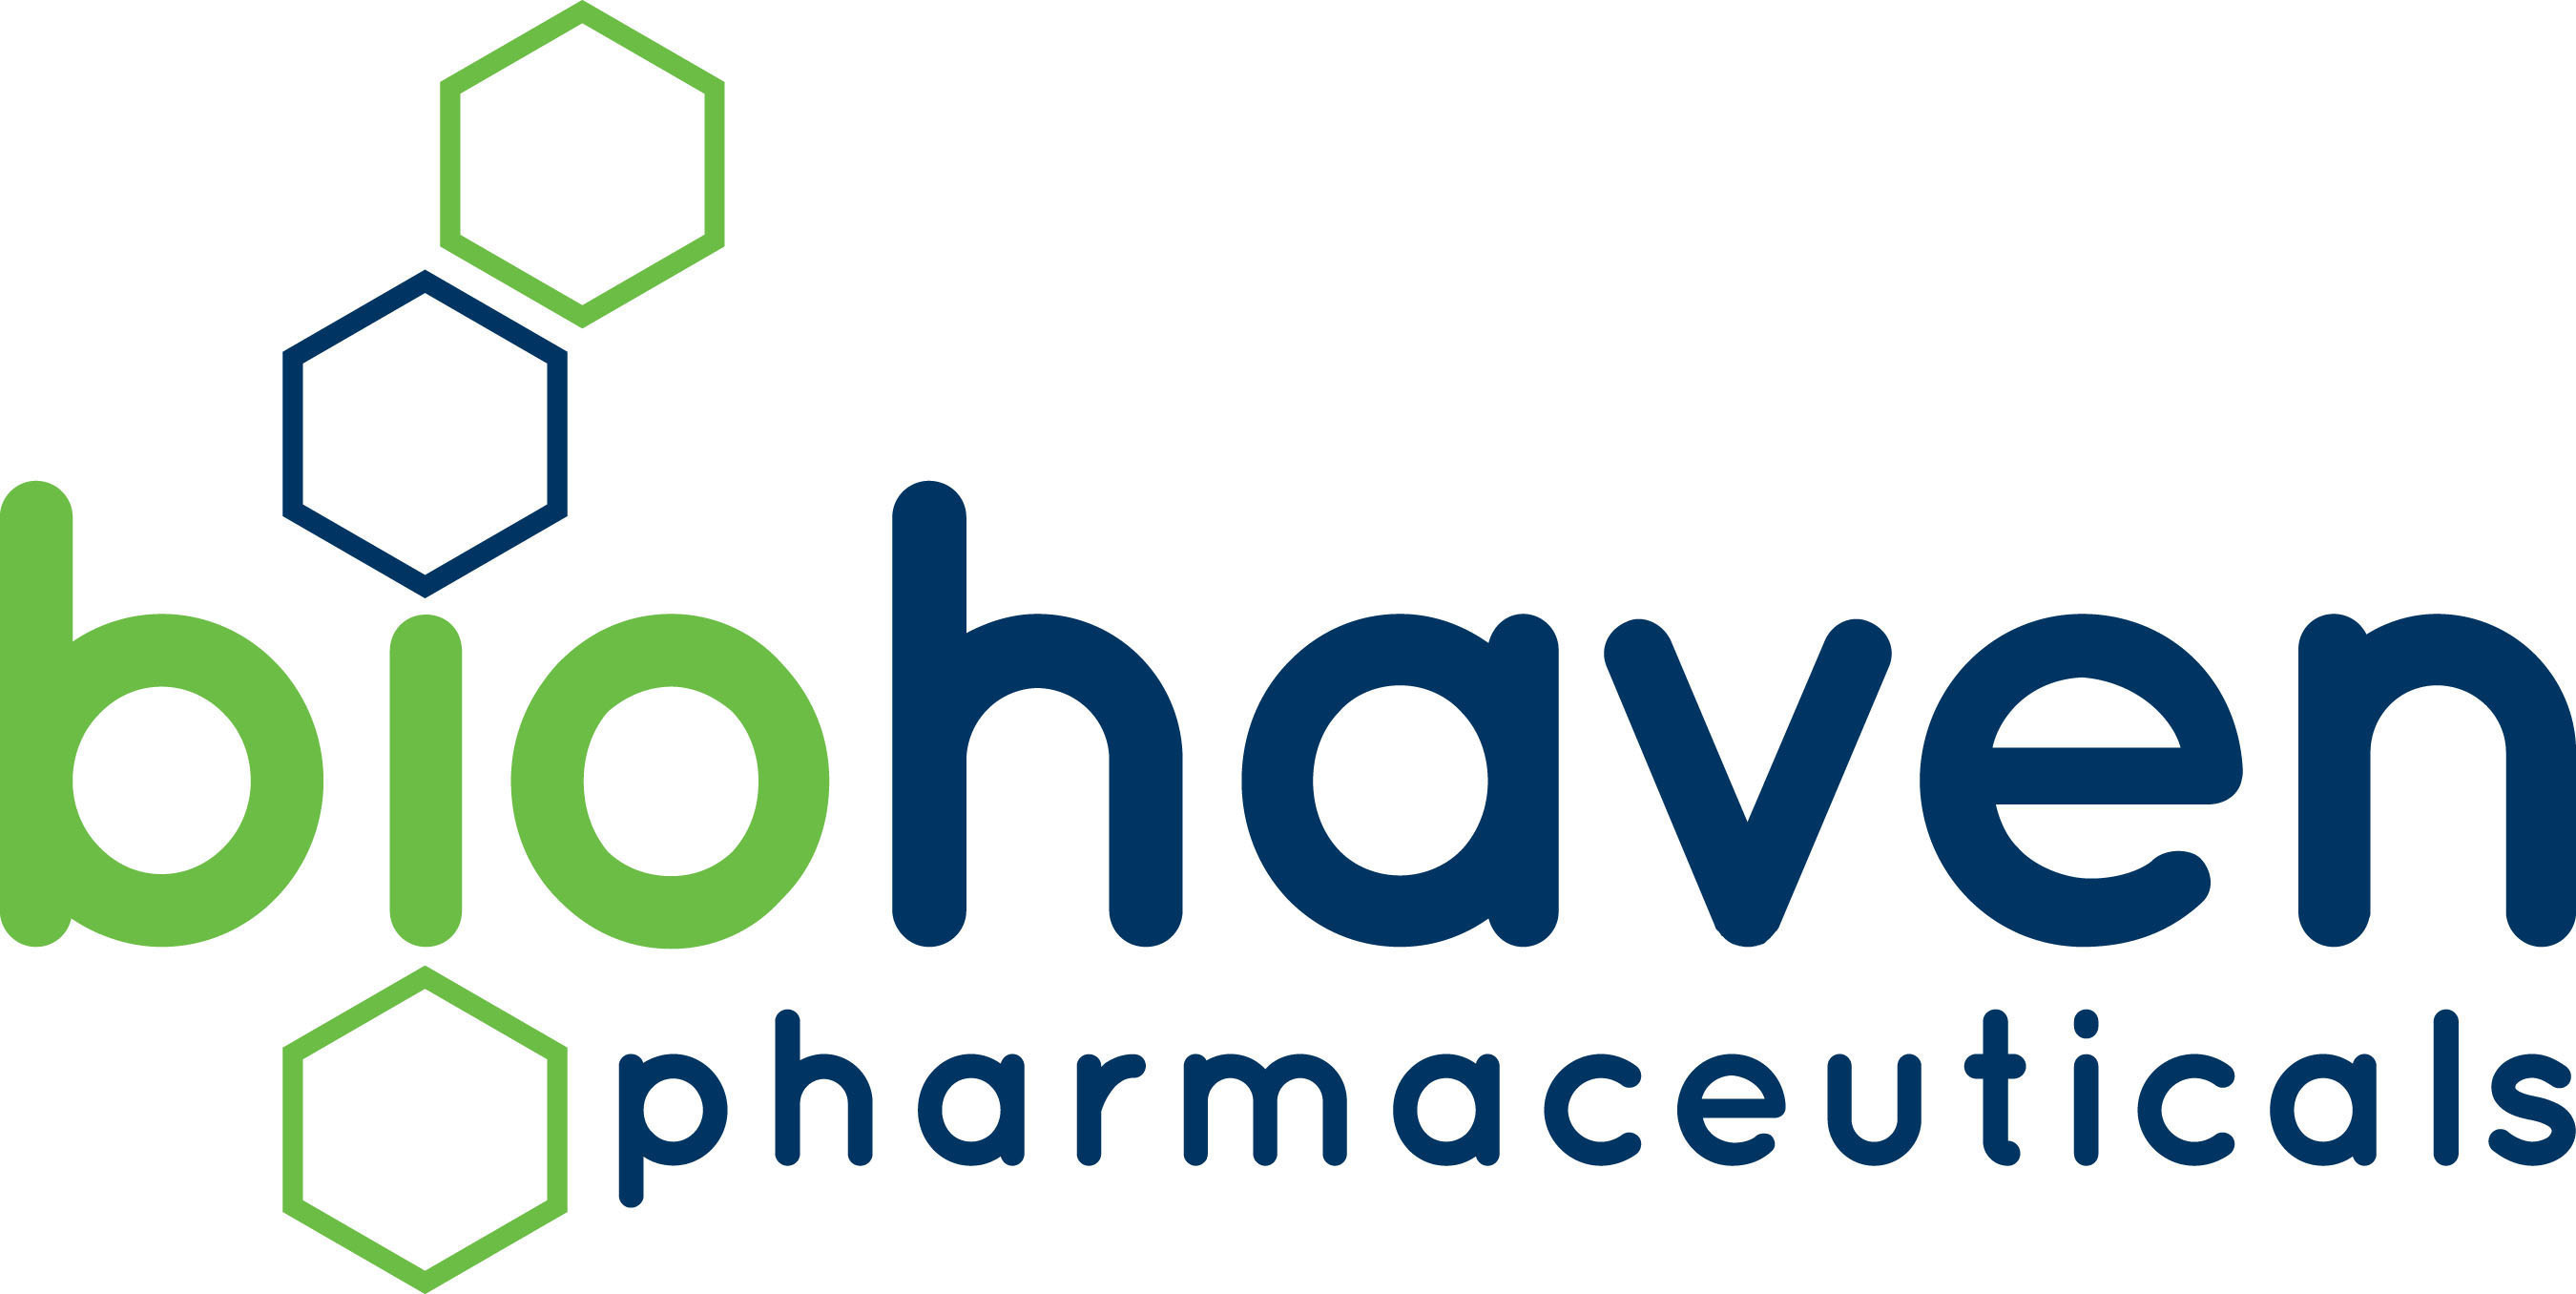 Biohaven Pharmaceutical Holding Company